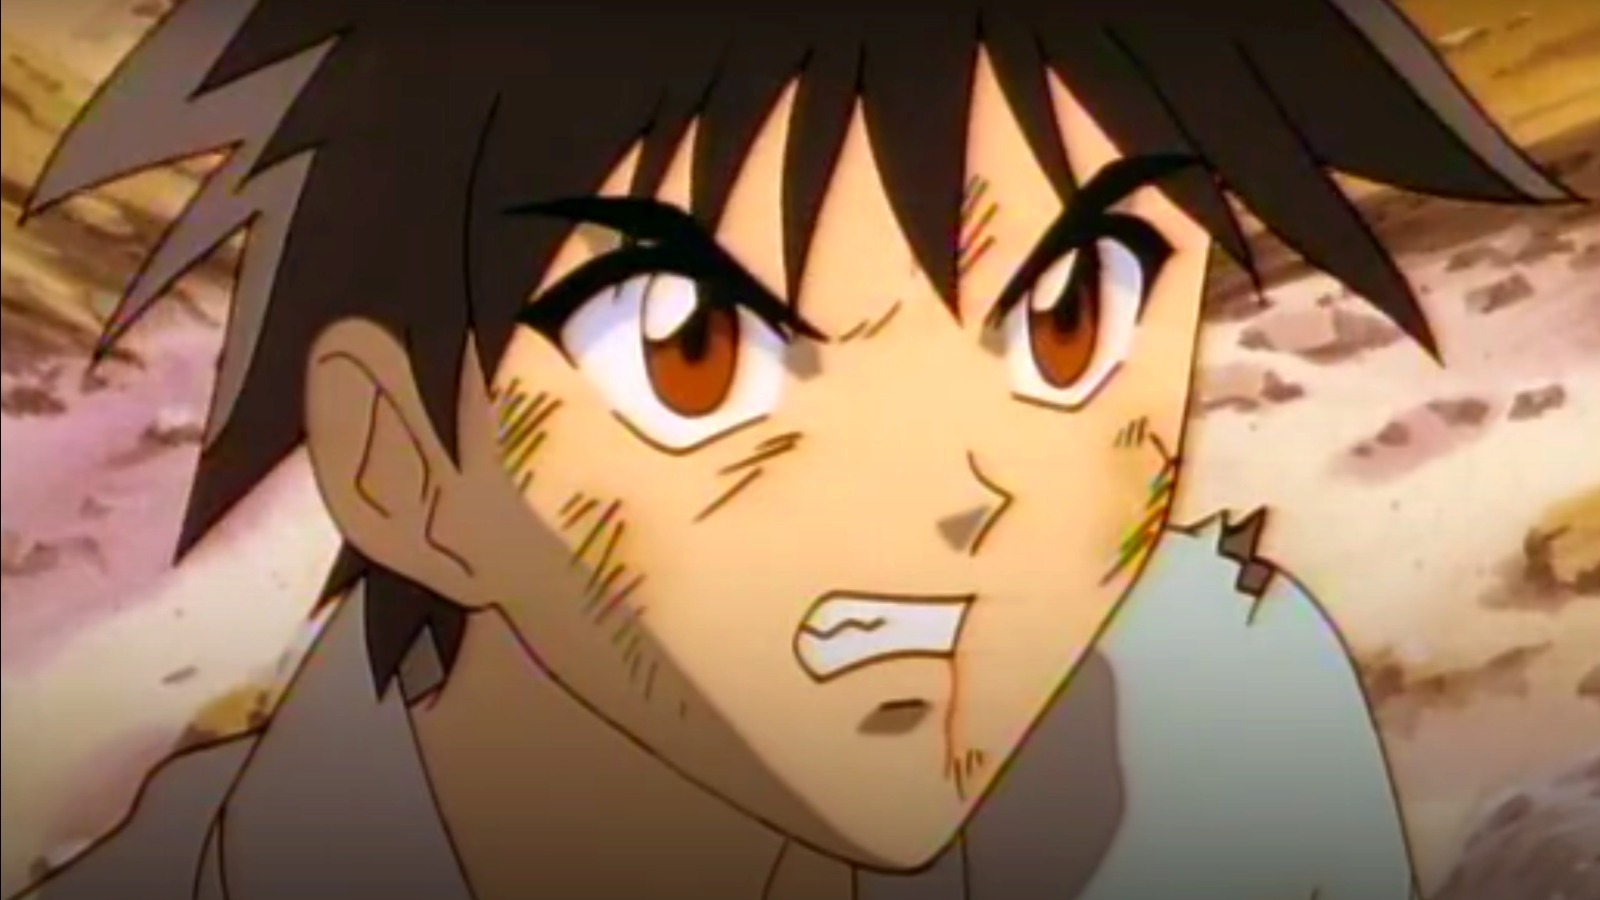 Rurouni Kenshin episode 10: Team Kenshin ambushes the Oniwabanshu after  Megumi takes matters into her own hands